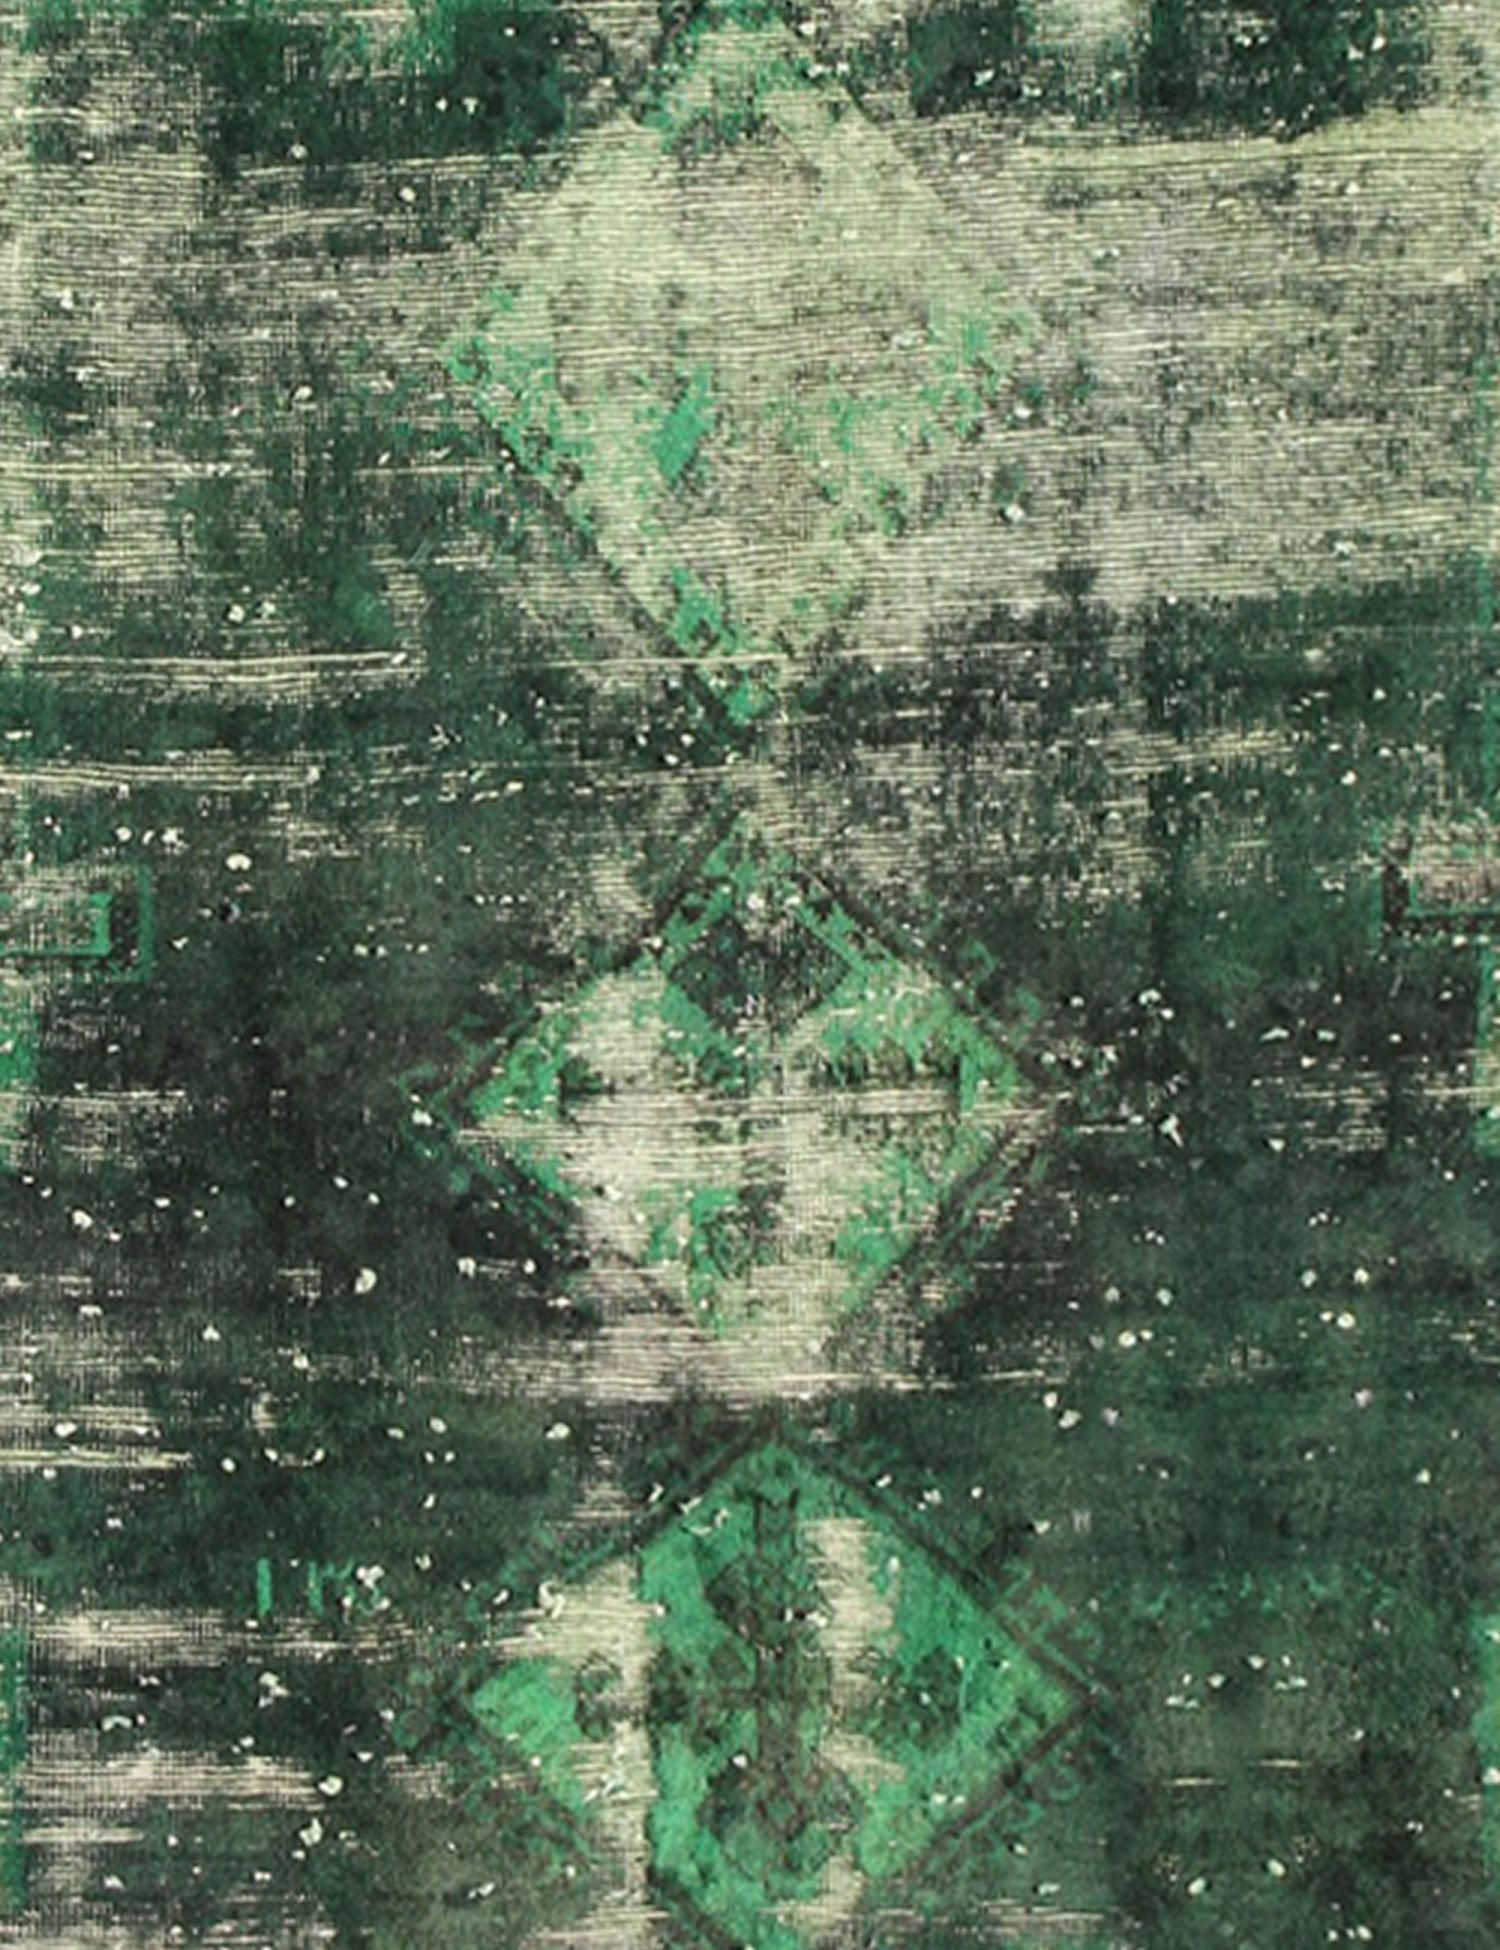 Persialaiset vintage matot  vihreä <br/>185 x 135 cm